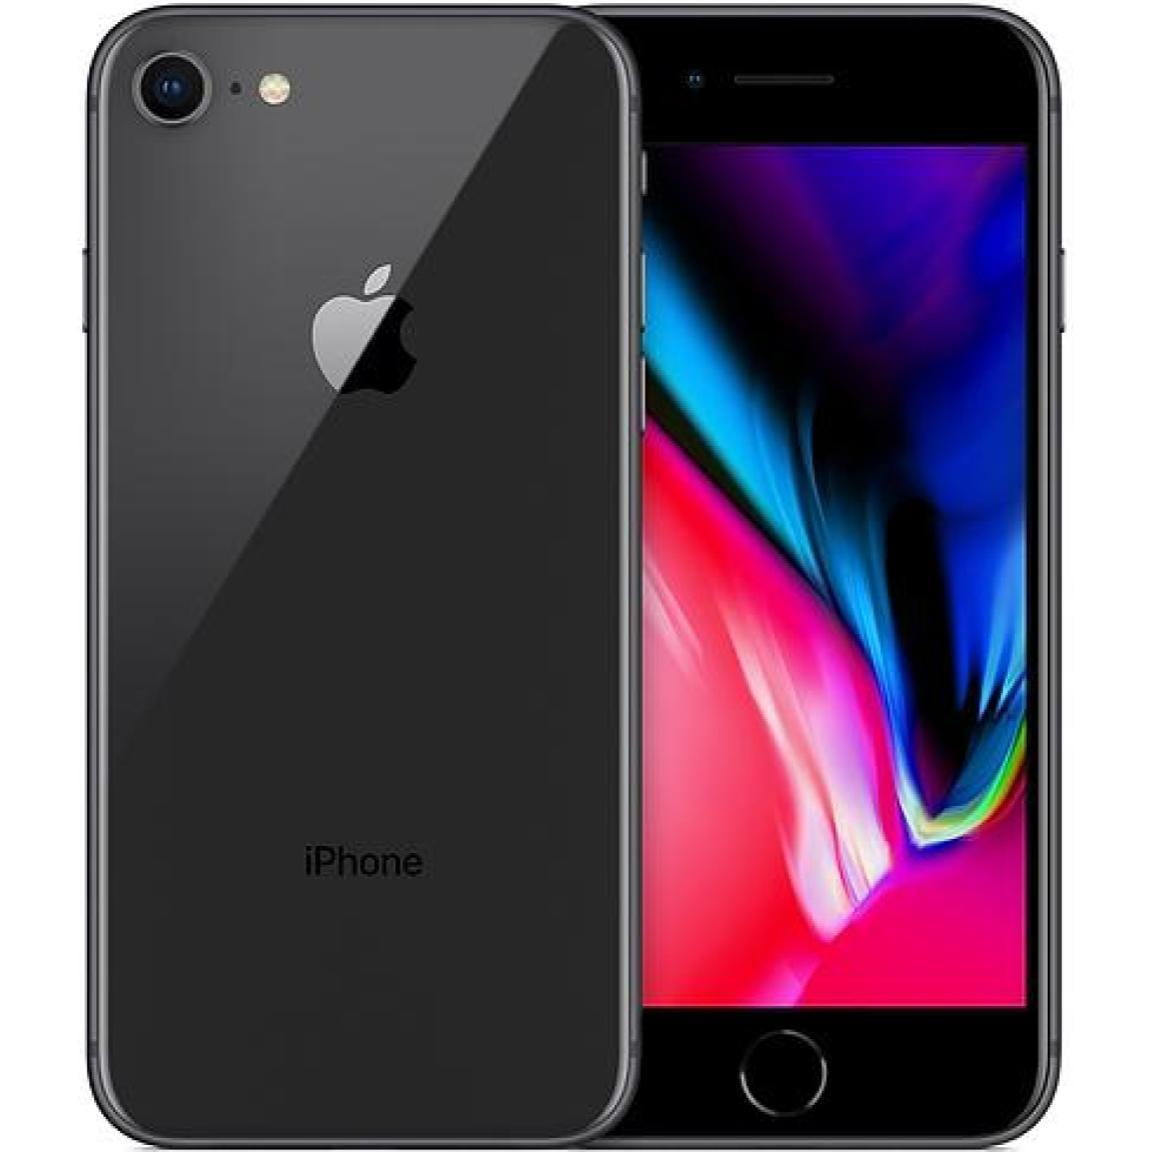 Apple Iphone 8 64gb Space Gray Fully Unlocked Verizon At T T Mobile Sprint Smartphone Grade A Refurbished Walmart Com